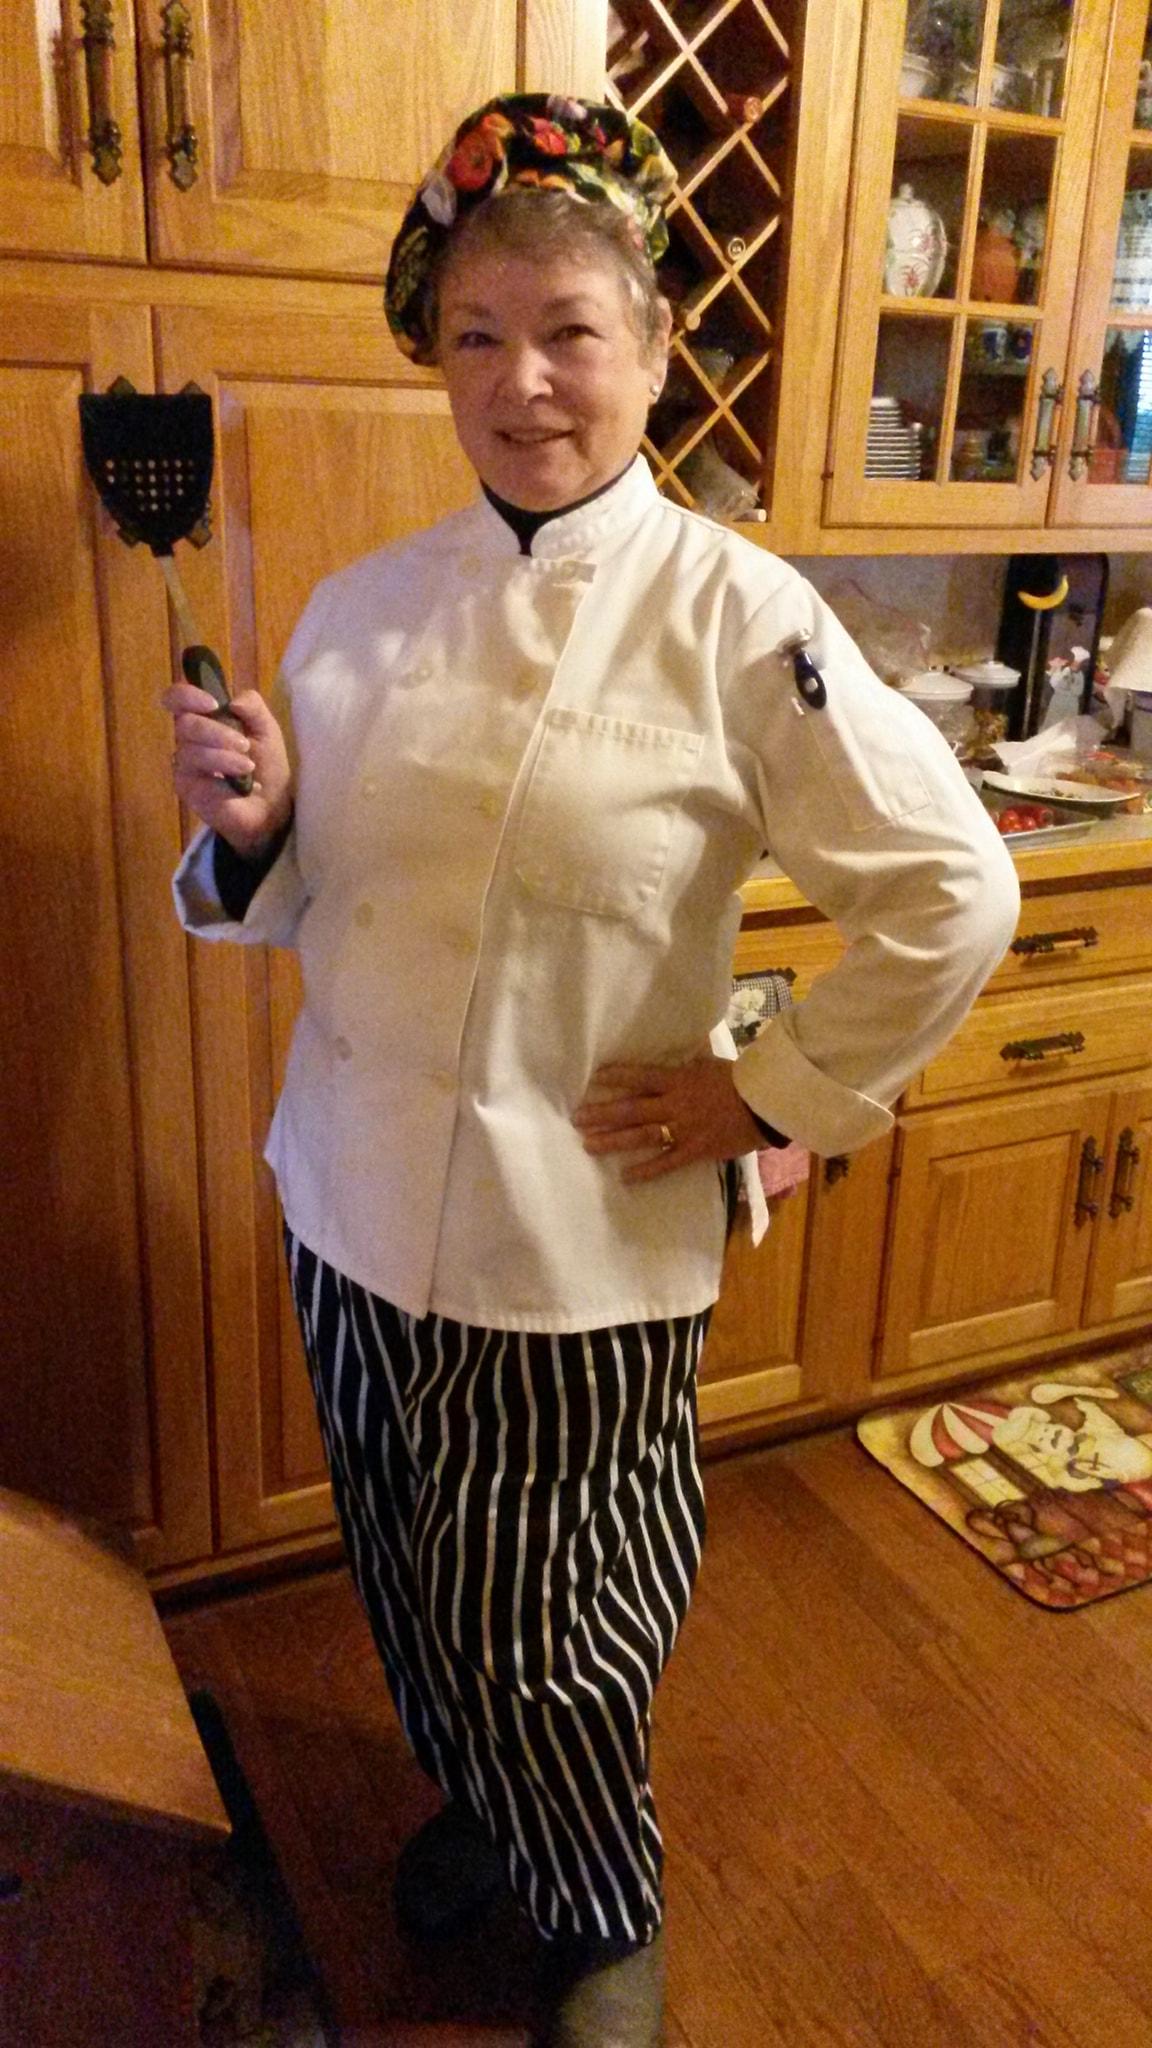 Kat Sturtz in chef's uniform